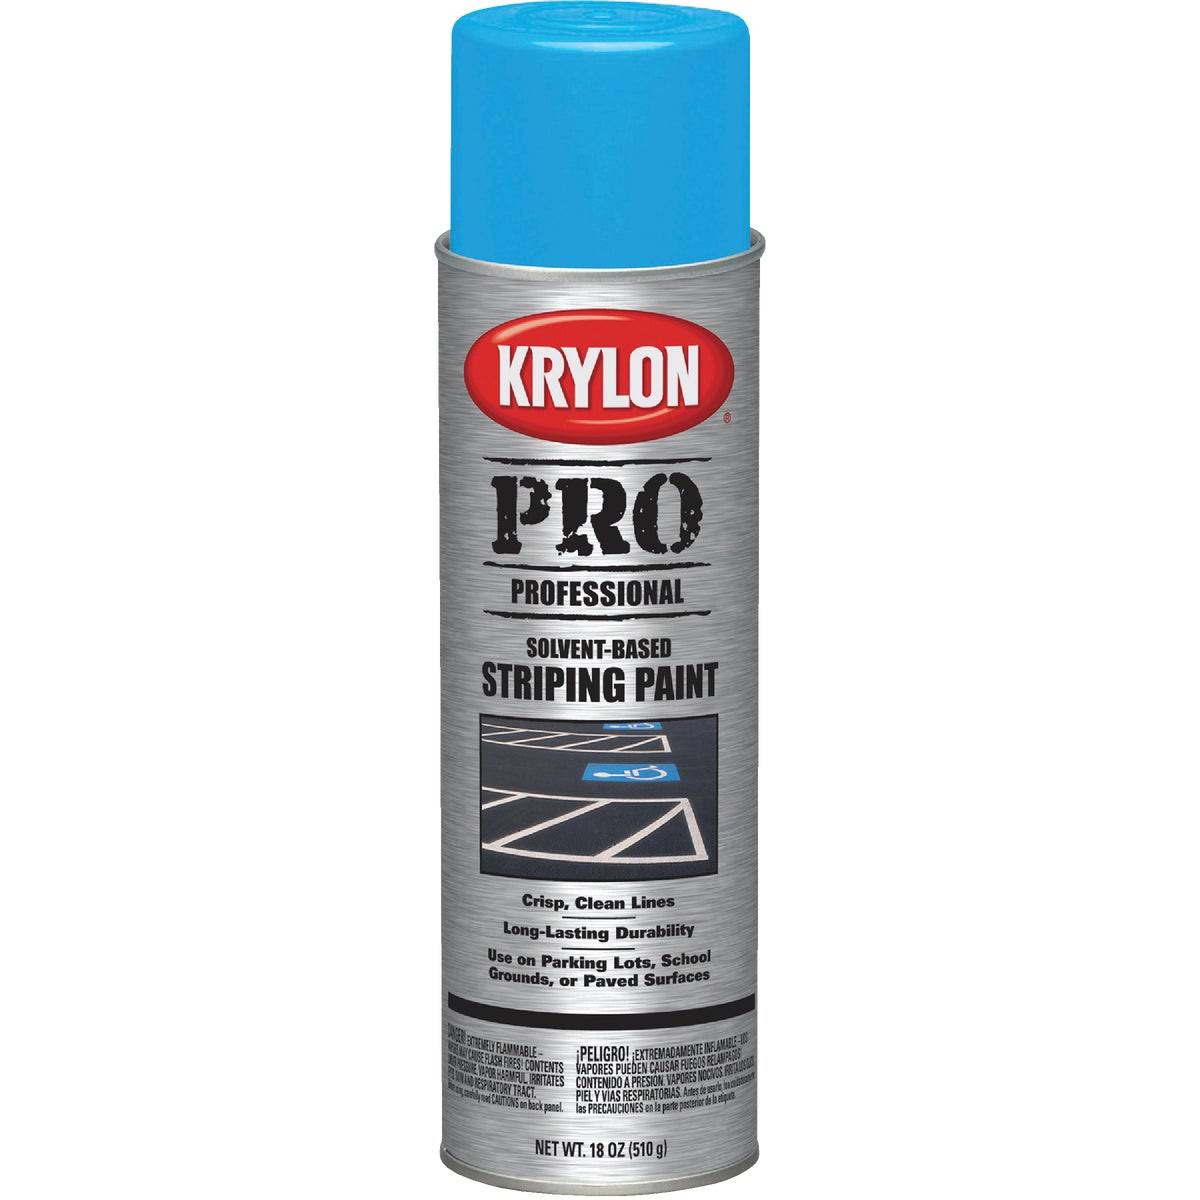 Krylon Professional Solvent Based Striping Paint - Handicap Blue, 18oz